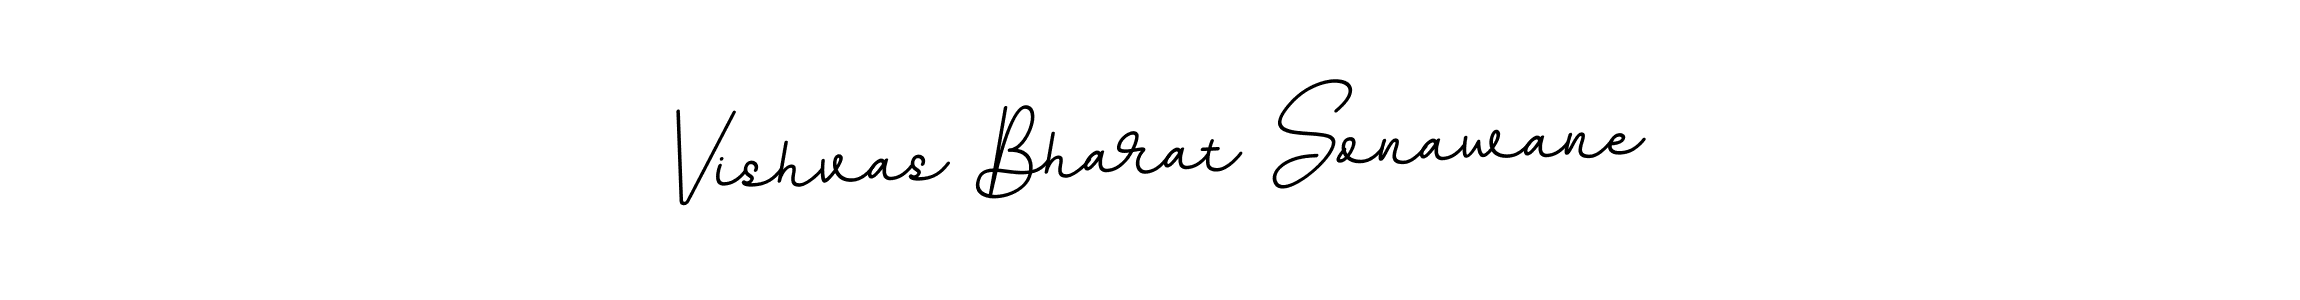 How to Draw Vishvas Bharat Sonawane signature style? BallpointsItalic-DORy9 is a latest design signature styles for name Vishvas Bharat Sonawane. Vishvas Bharat Sonawane signature style 11 images and pictures png